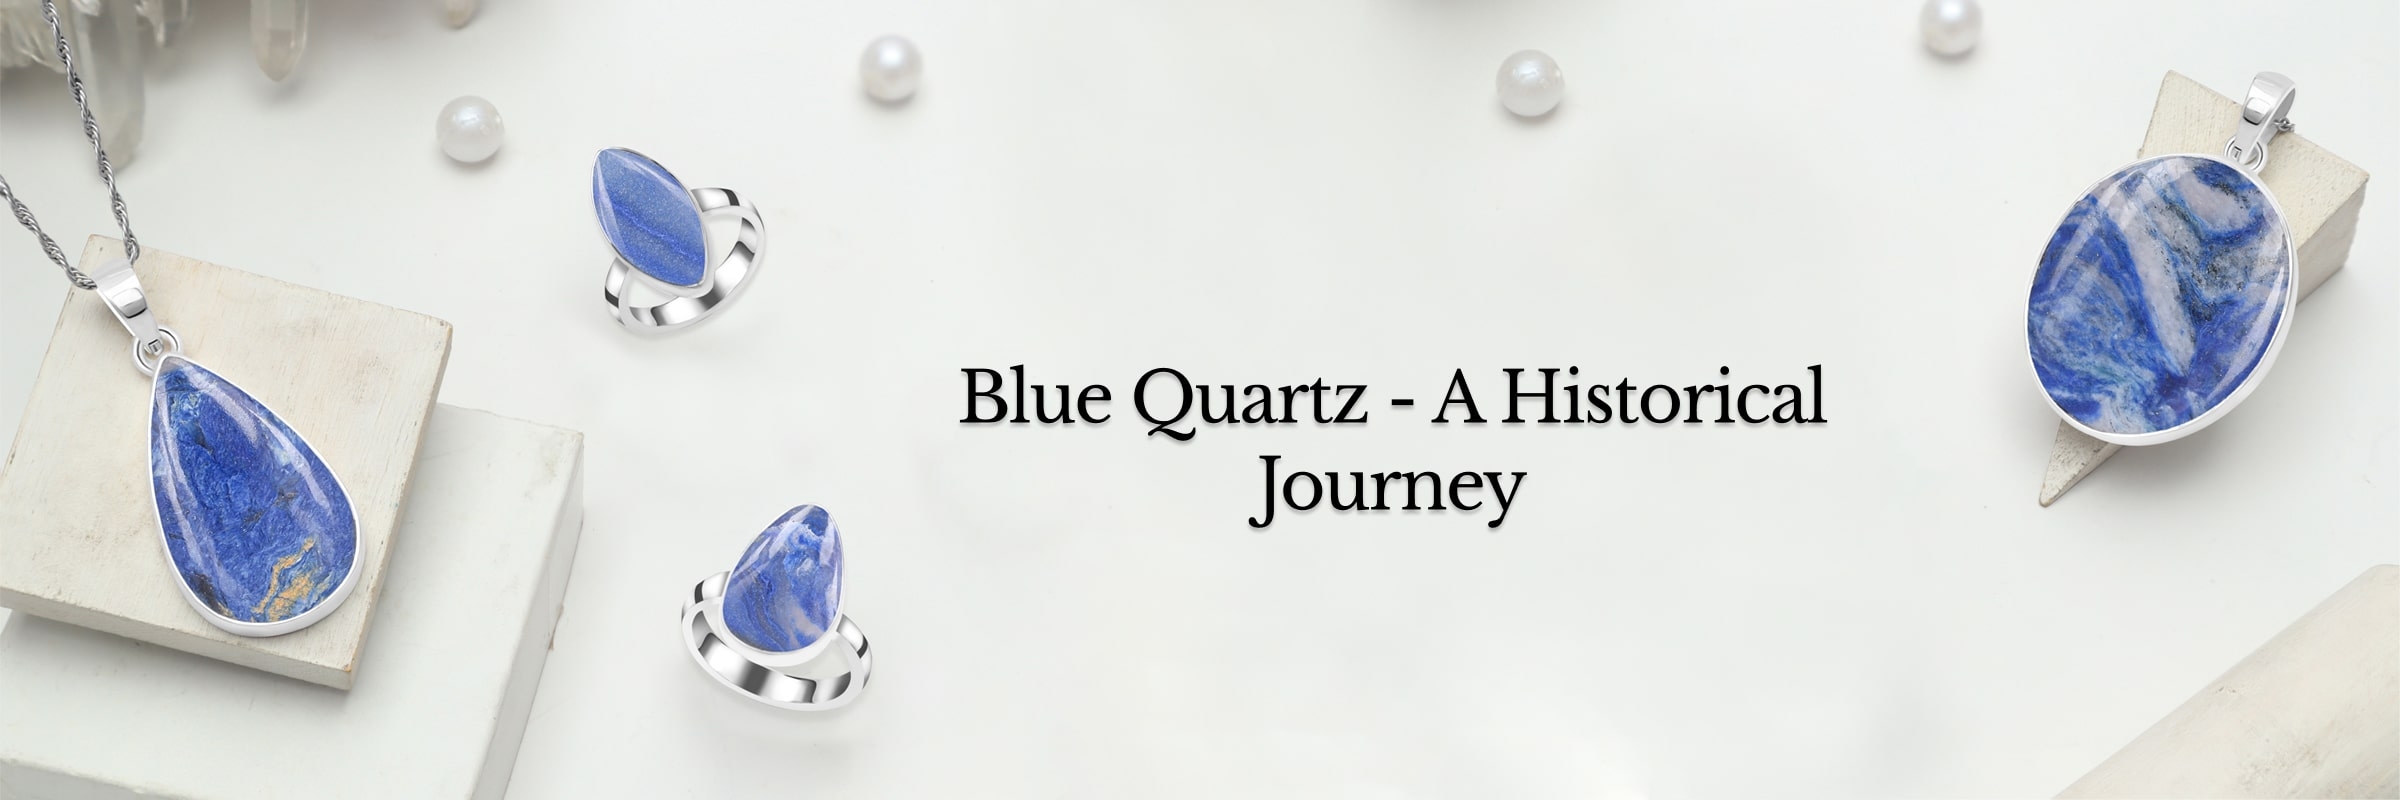 History of Blue Quartz